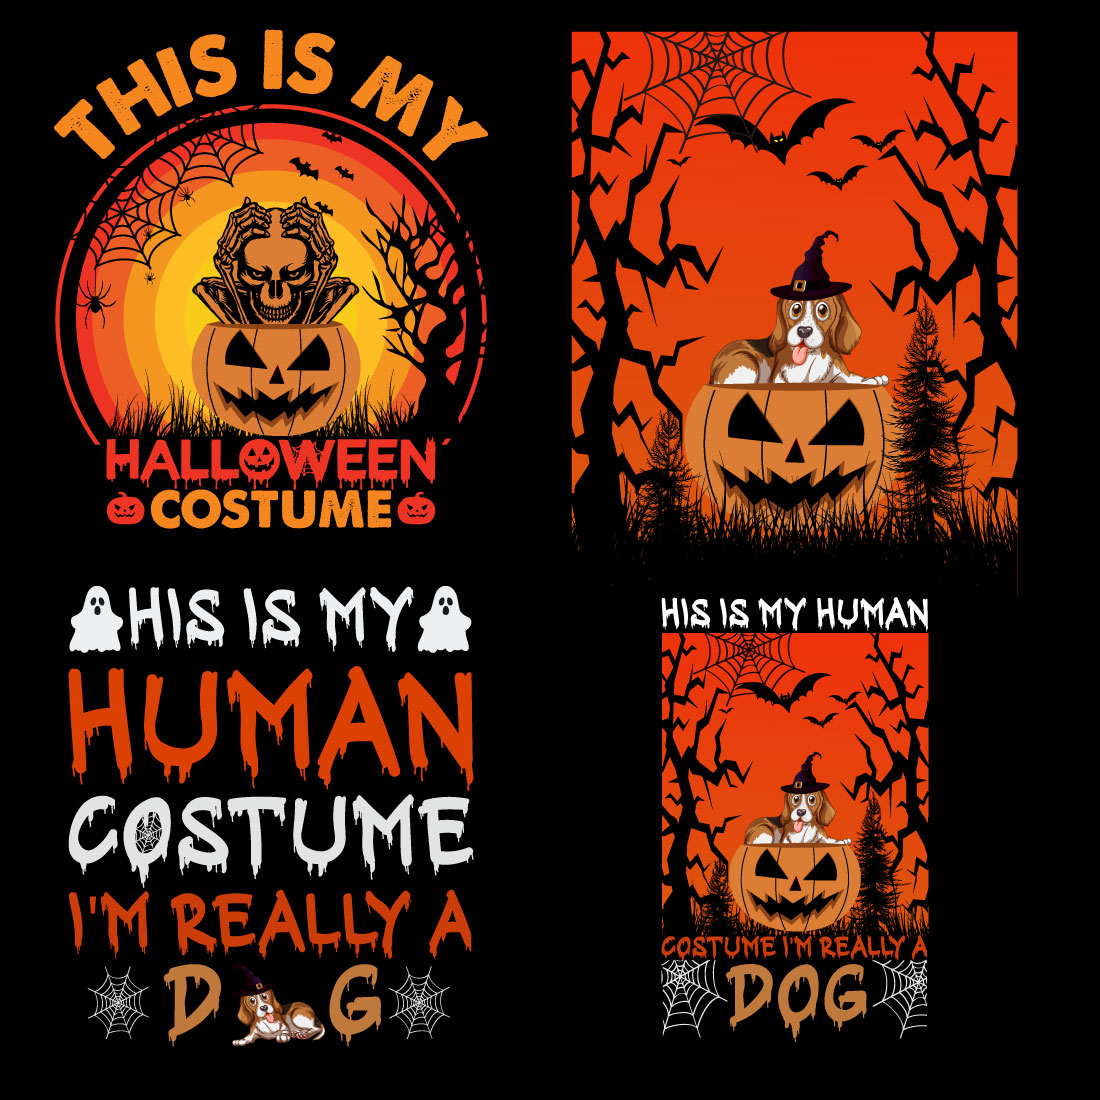 Halloween t-shirt designs bundle of 44 vector images